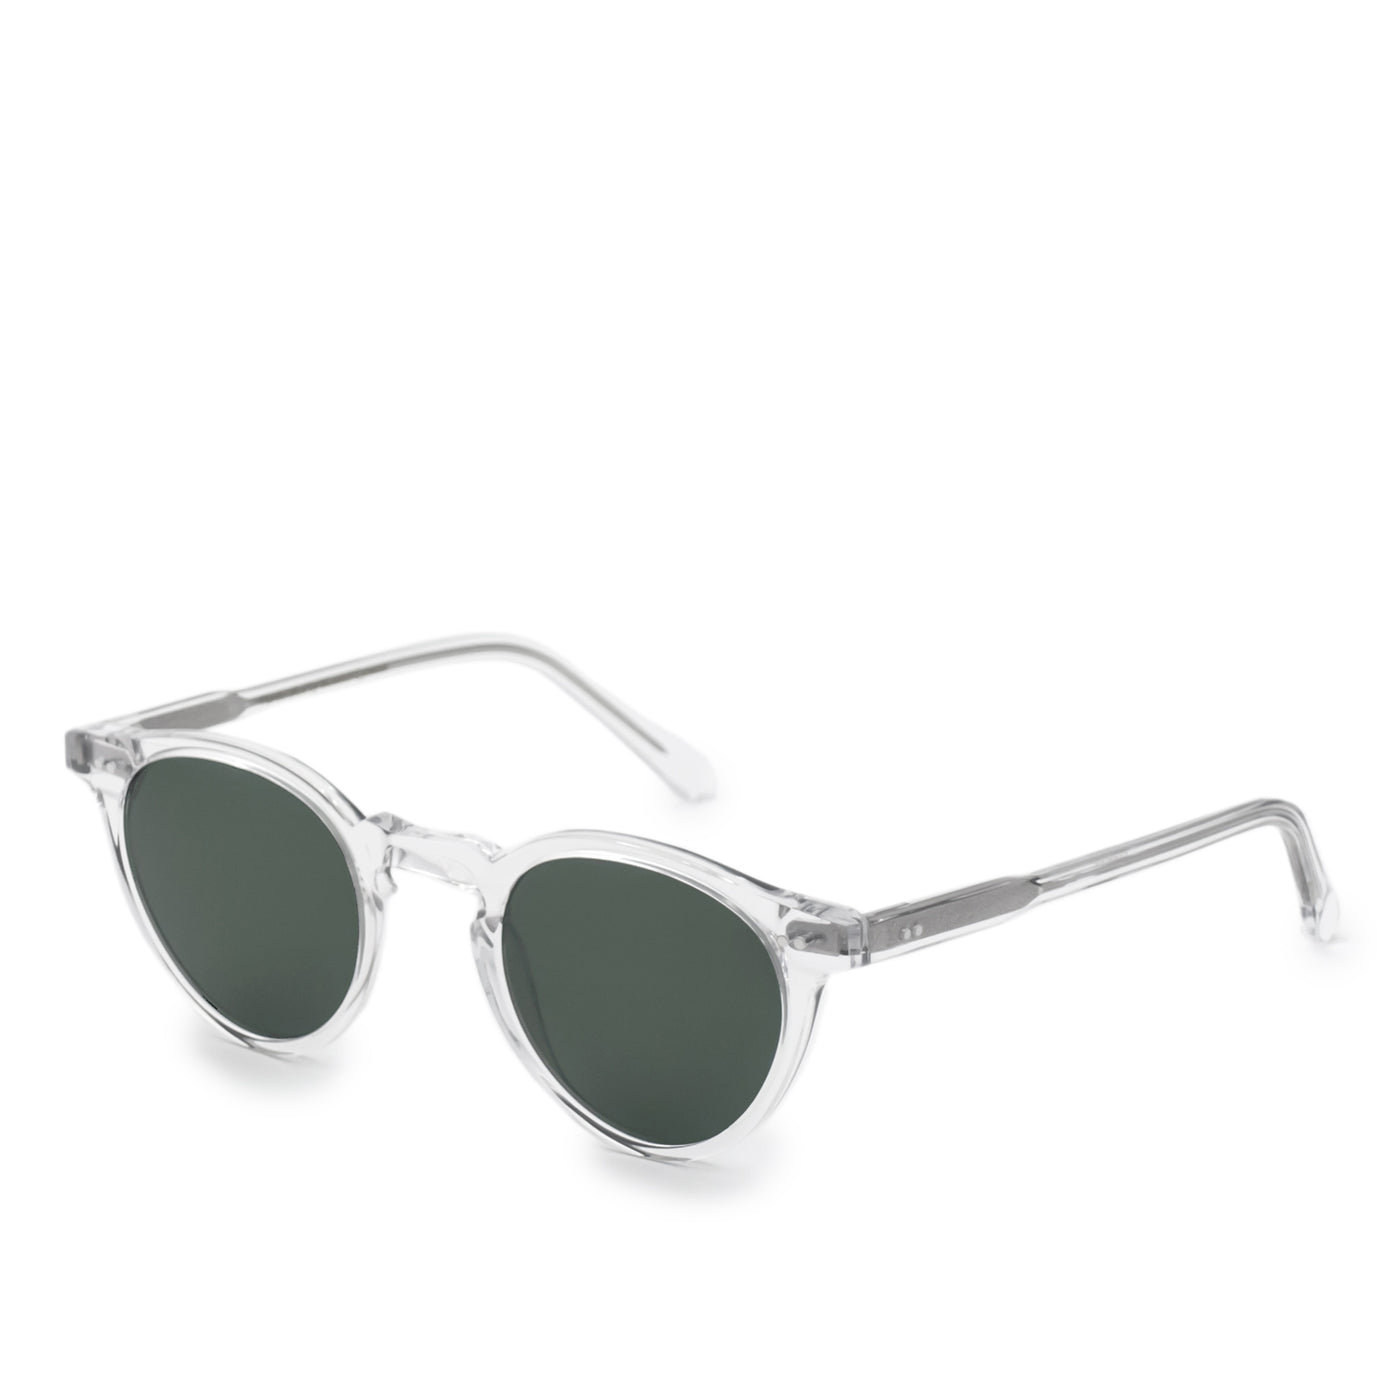 Monokel Forest Crystal Sunglasses Green Solid Lens side